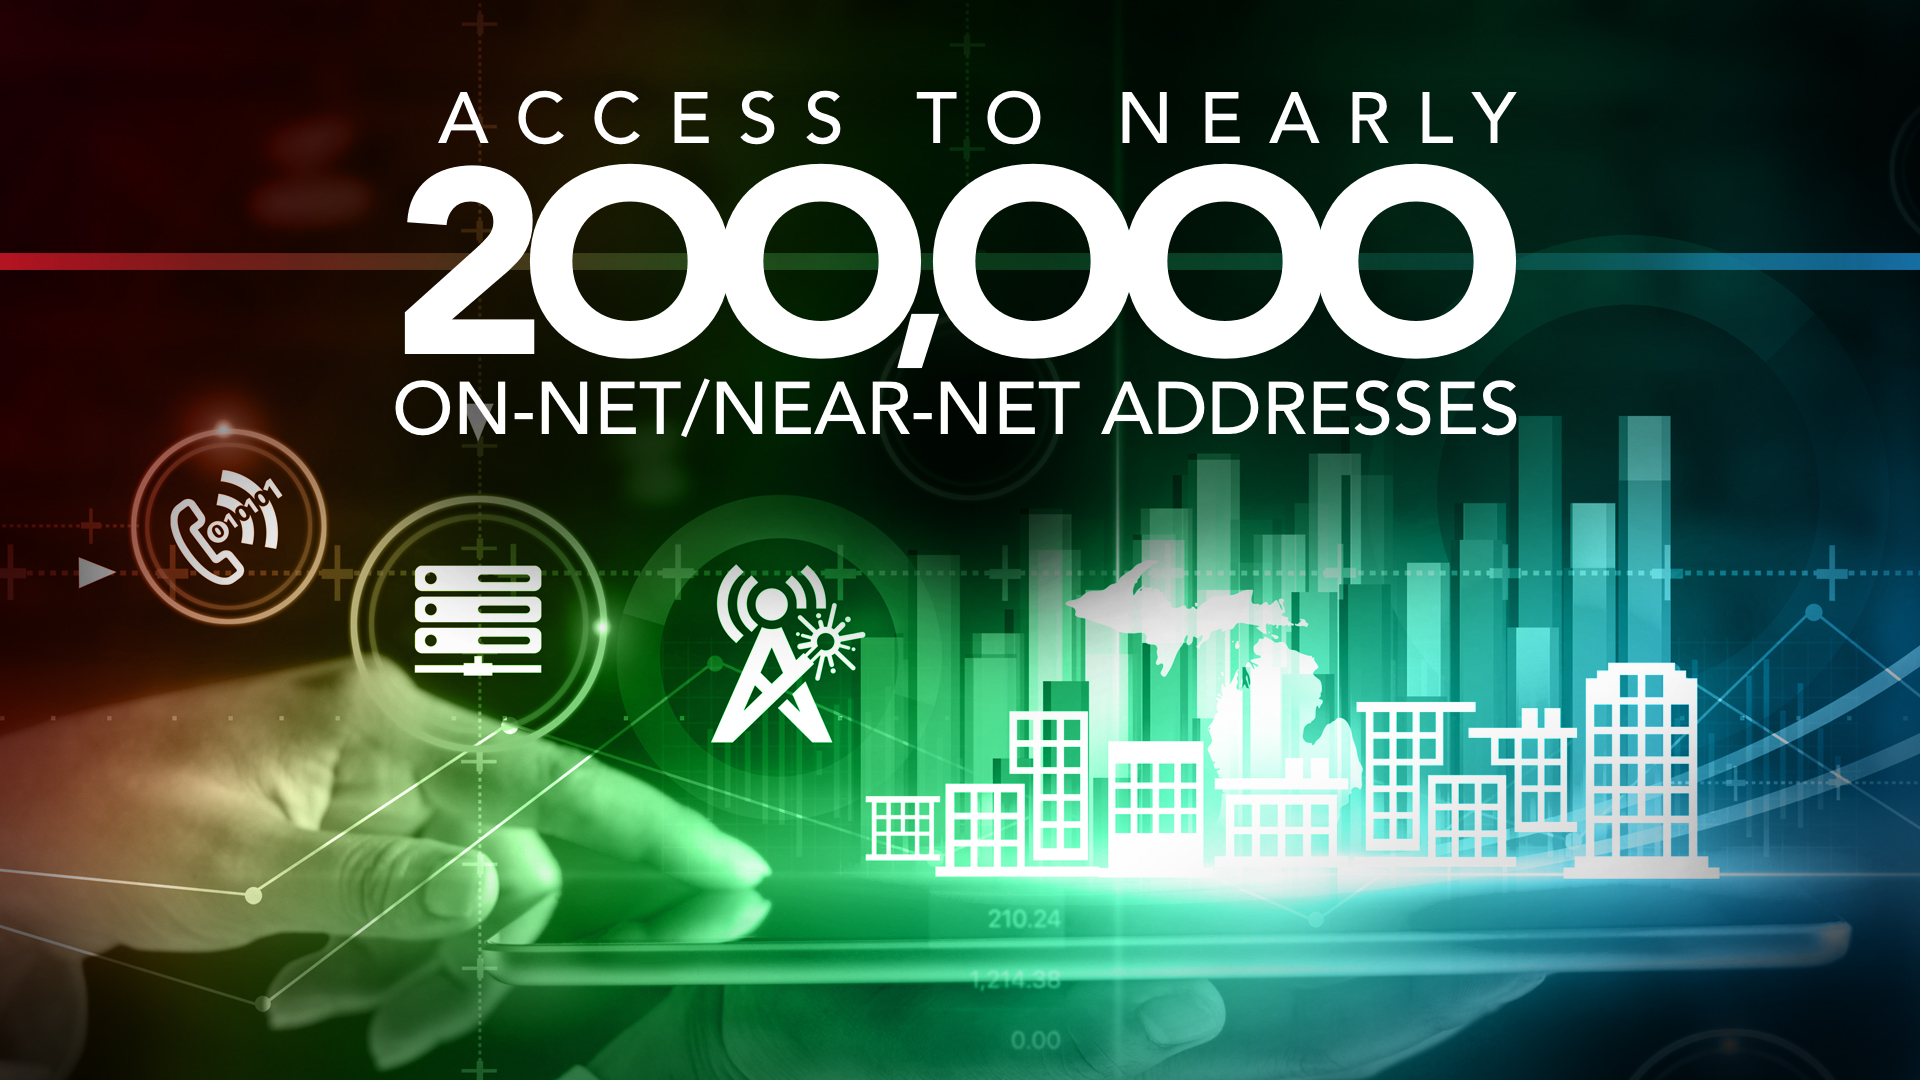 123NET: Access to Nearly 200,000 On-Net & Near-Net Addresses